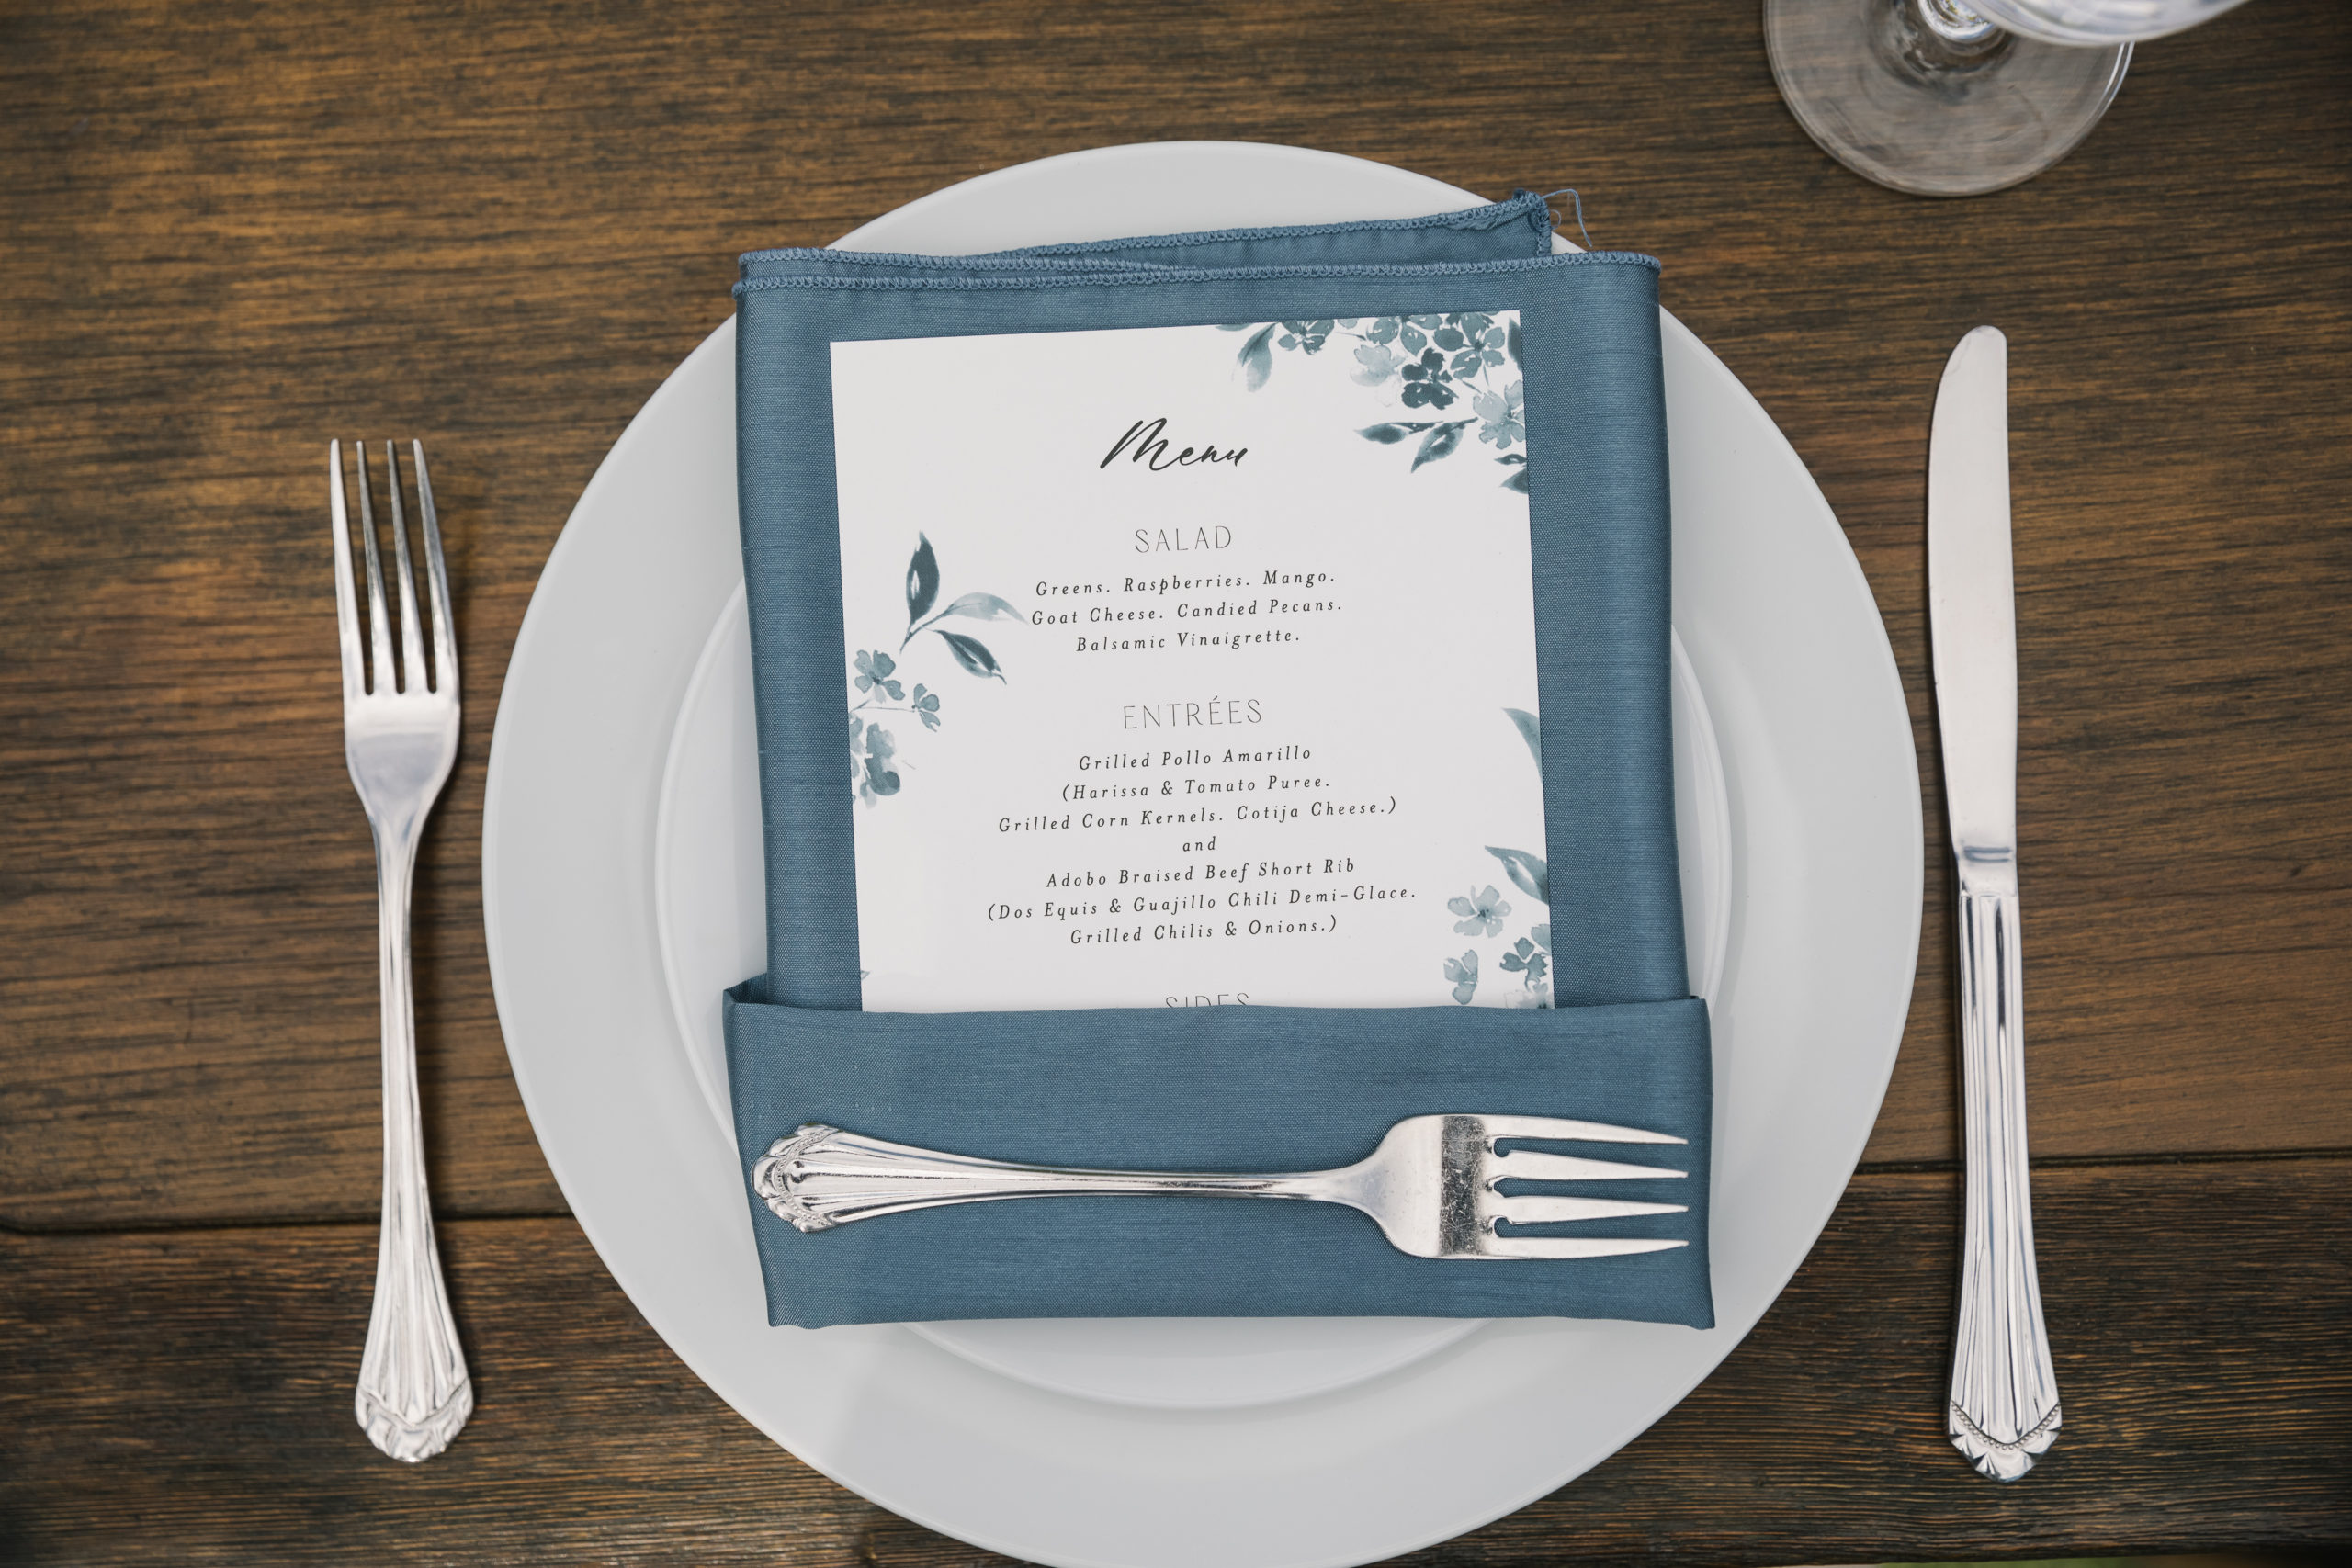 menu card tucked into dark blue napkin on white plate